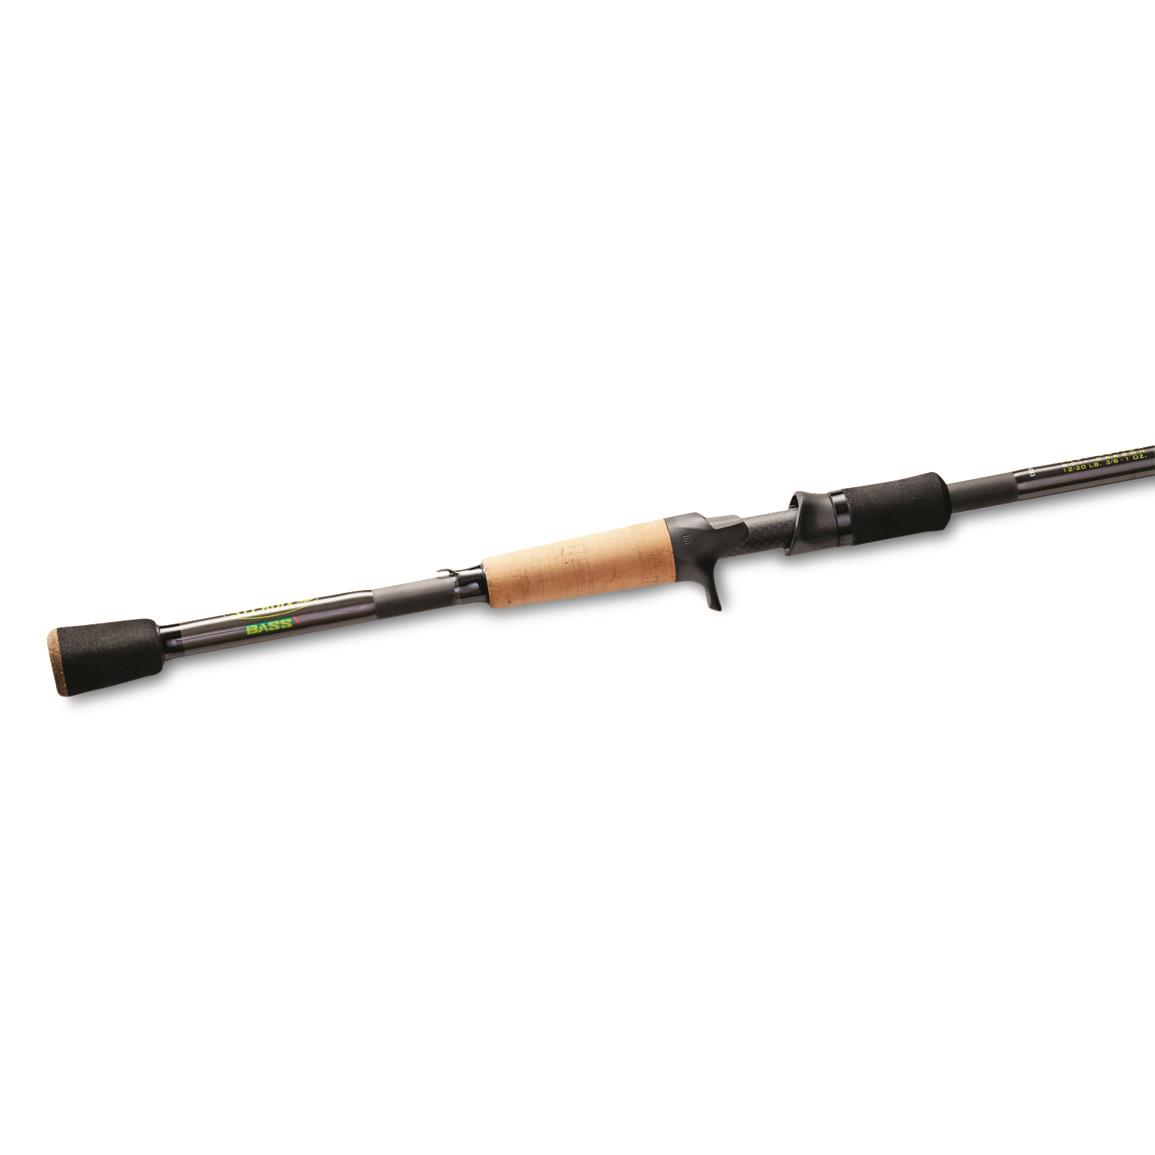 St. Croix Bass X Casting Rod, 6'6" Length, Medium Power, Fast Action